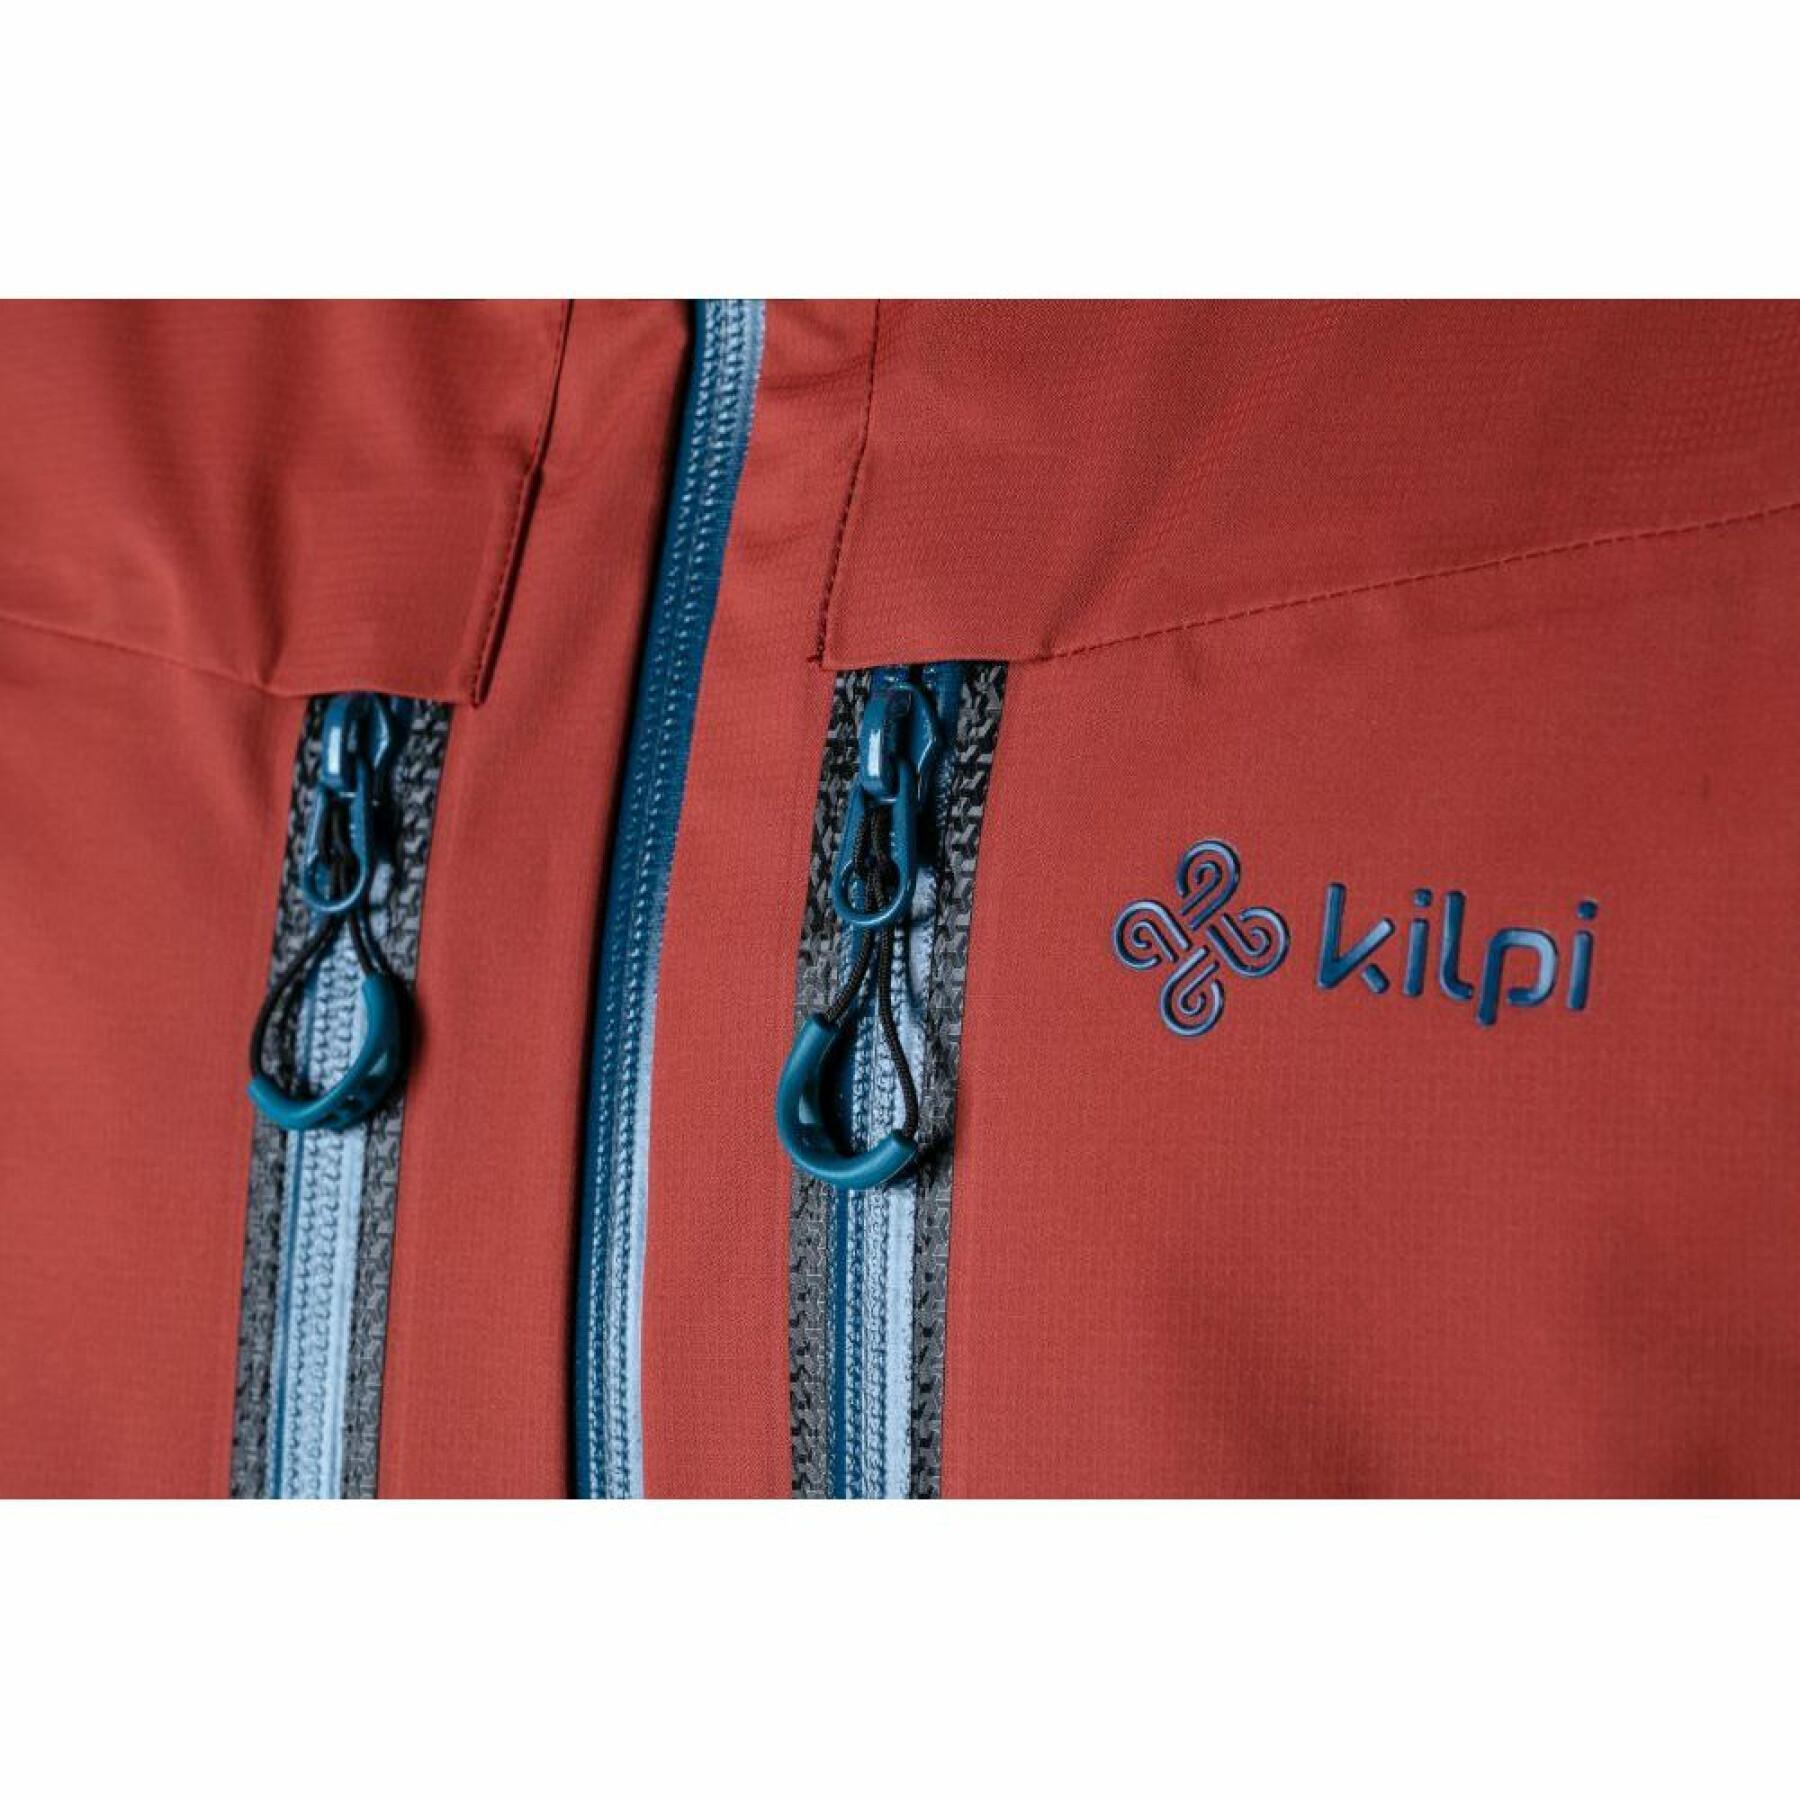 Waterproof jacket Kilpi Hastar